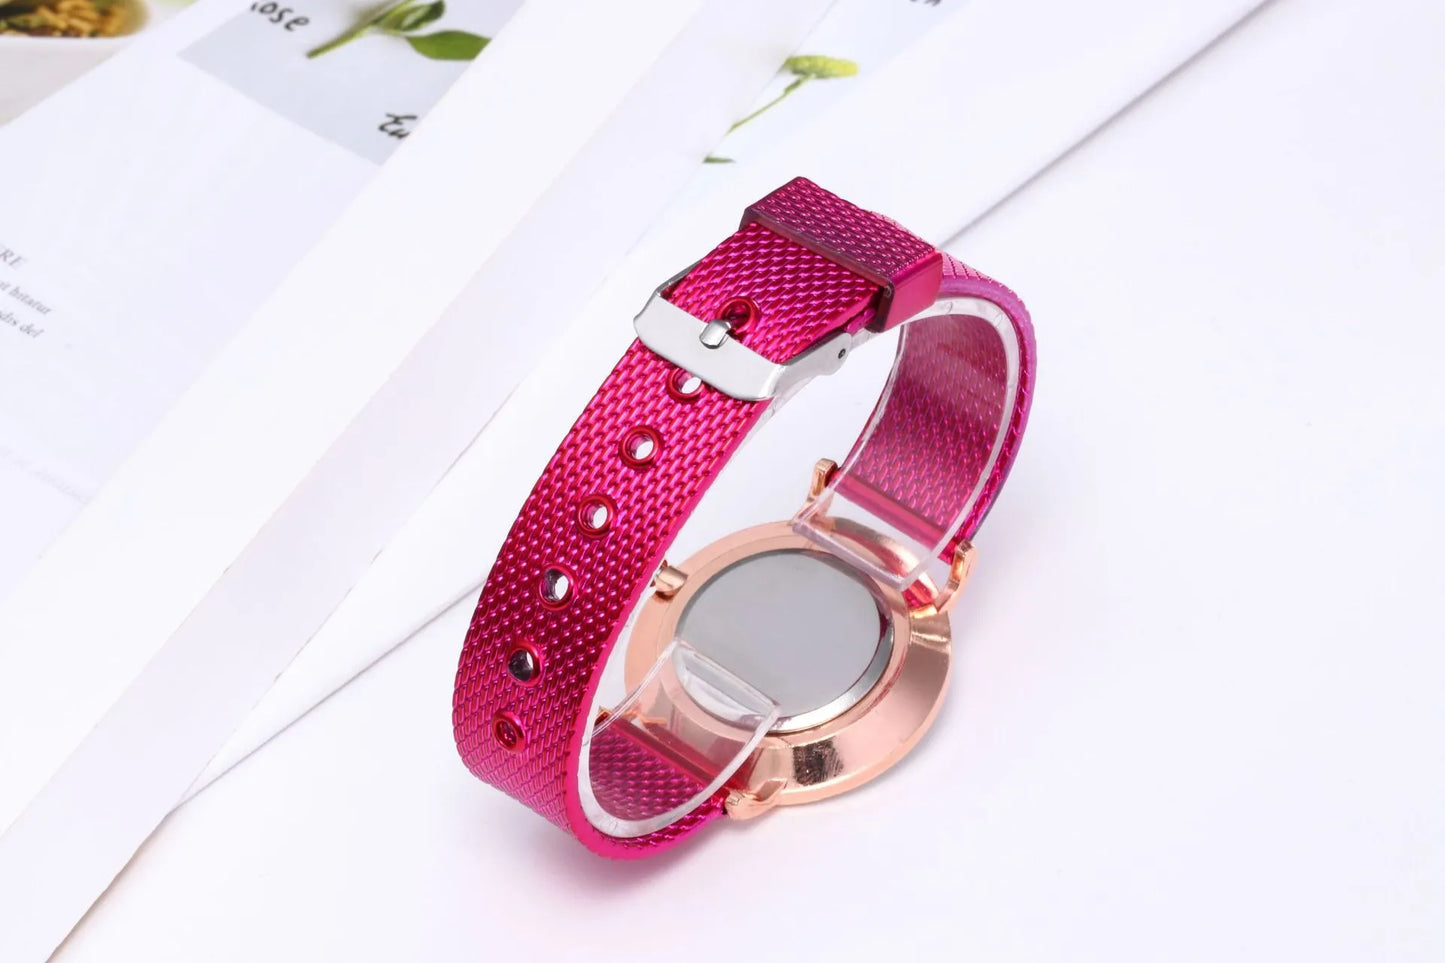 Luxury Wrist Watches for Women Fashion Quartz Watch Silicone Band Dial Women Wathes Casual Ladies watch relogio feminino